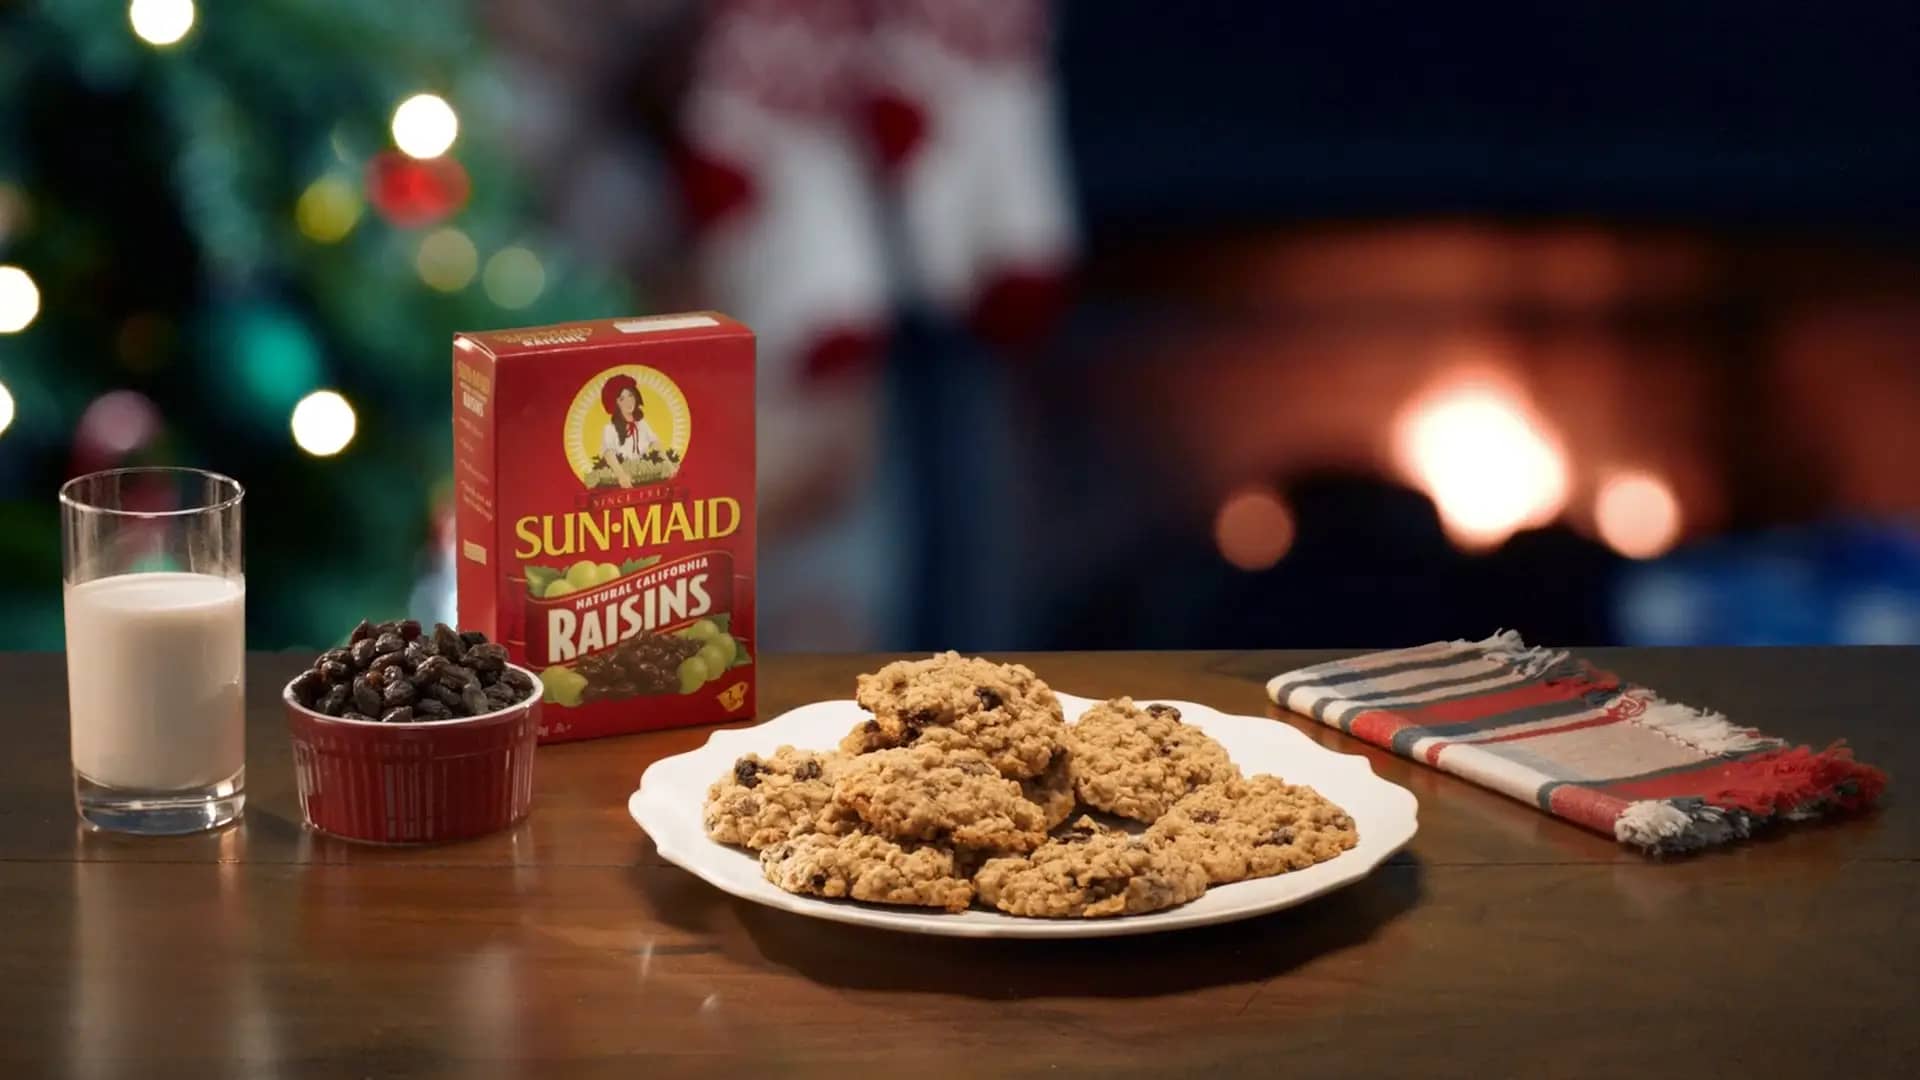 Sun-maid Raisins: Spot promocional, “Bake It For Santa”.